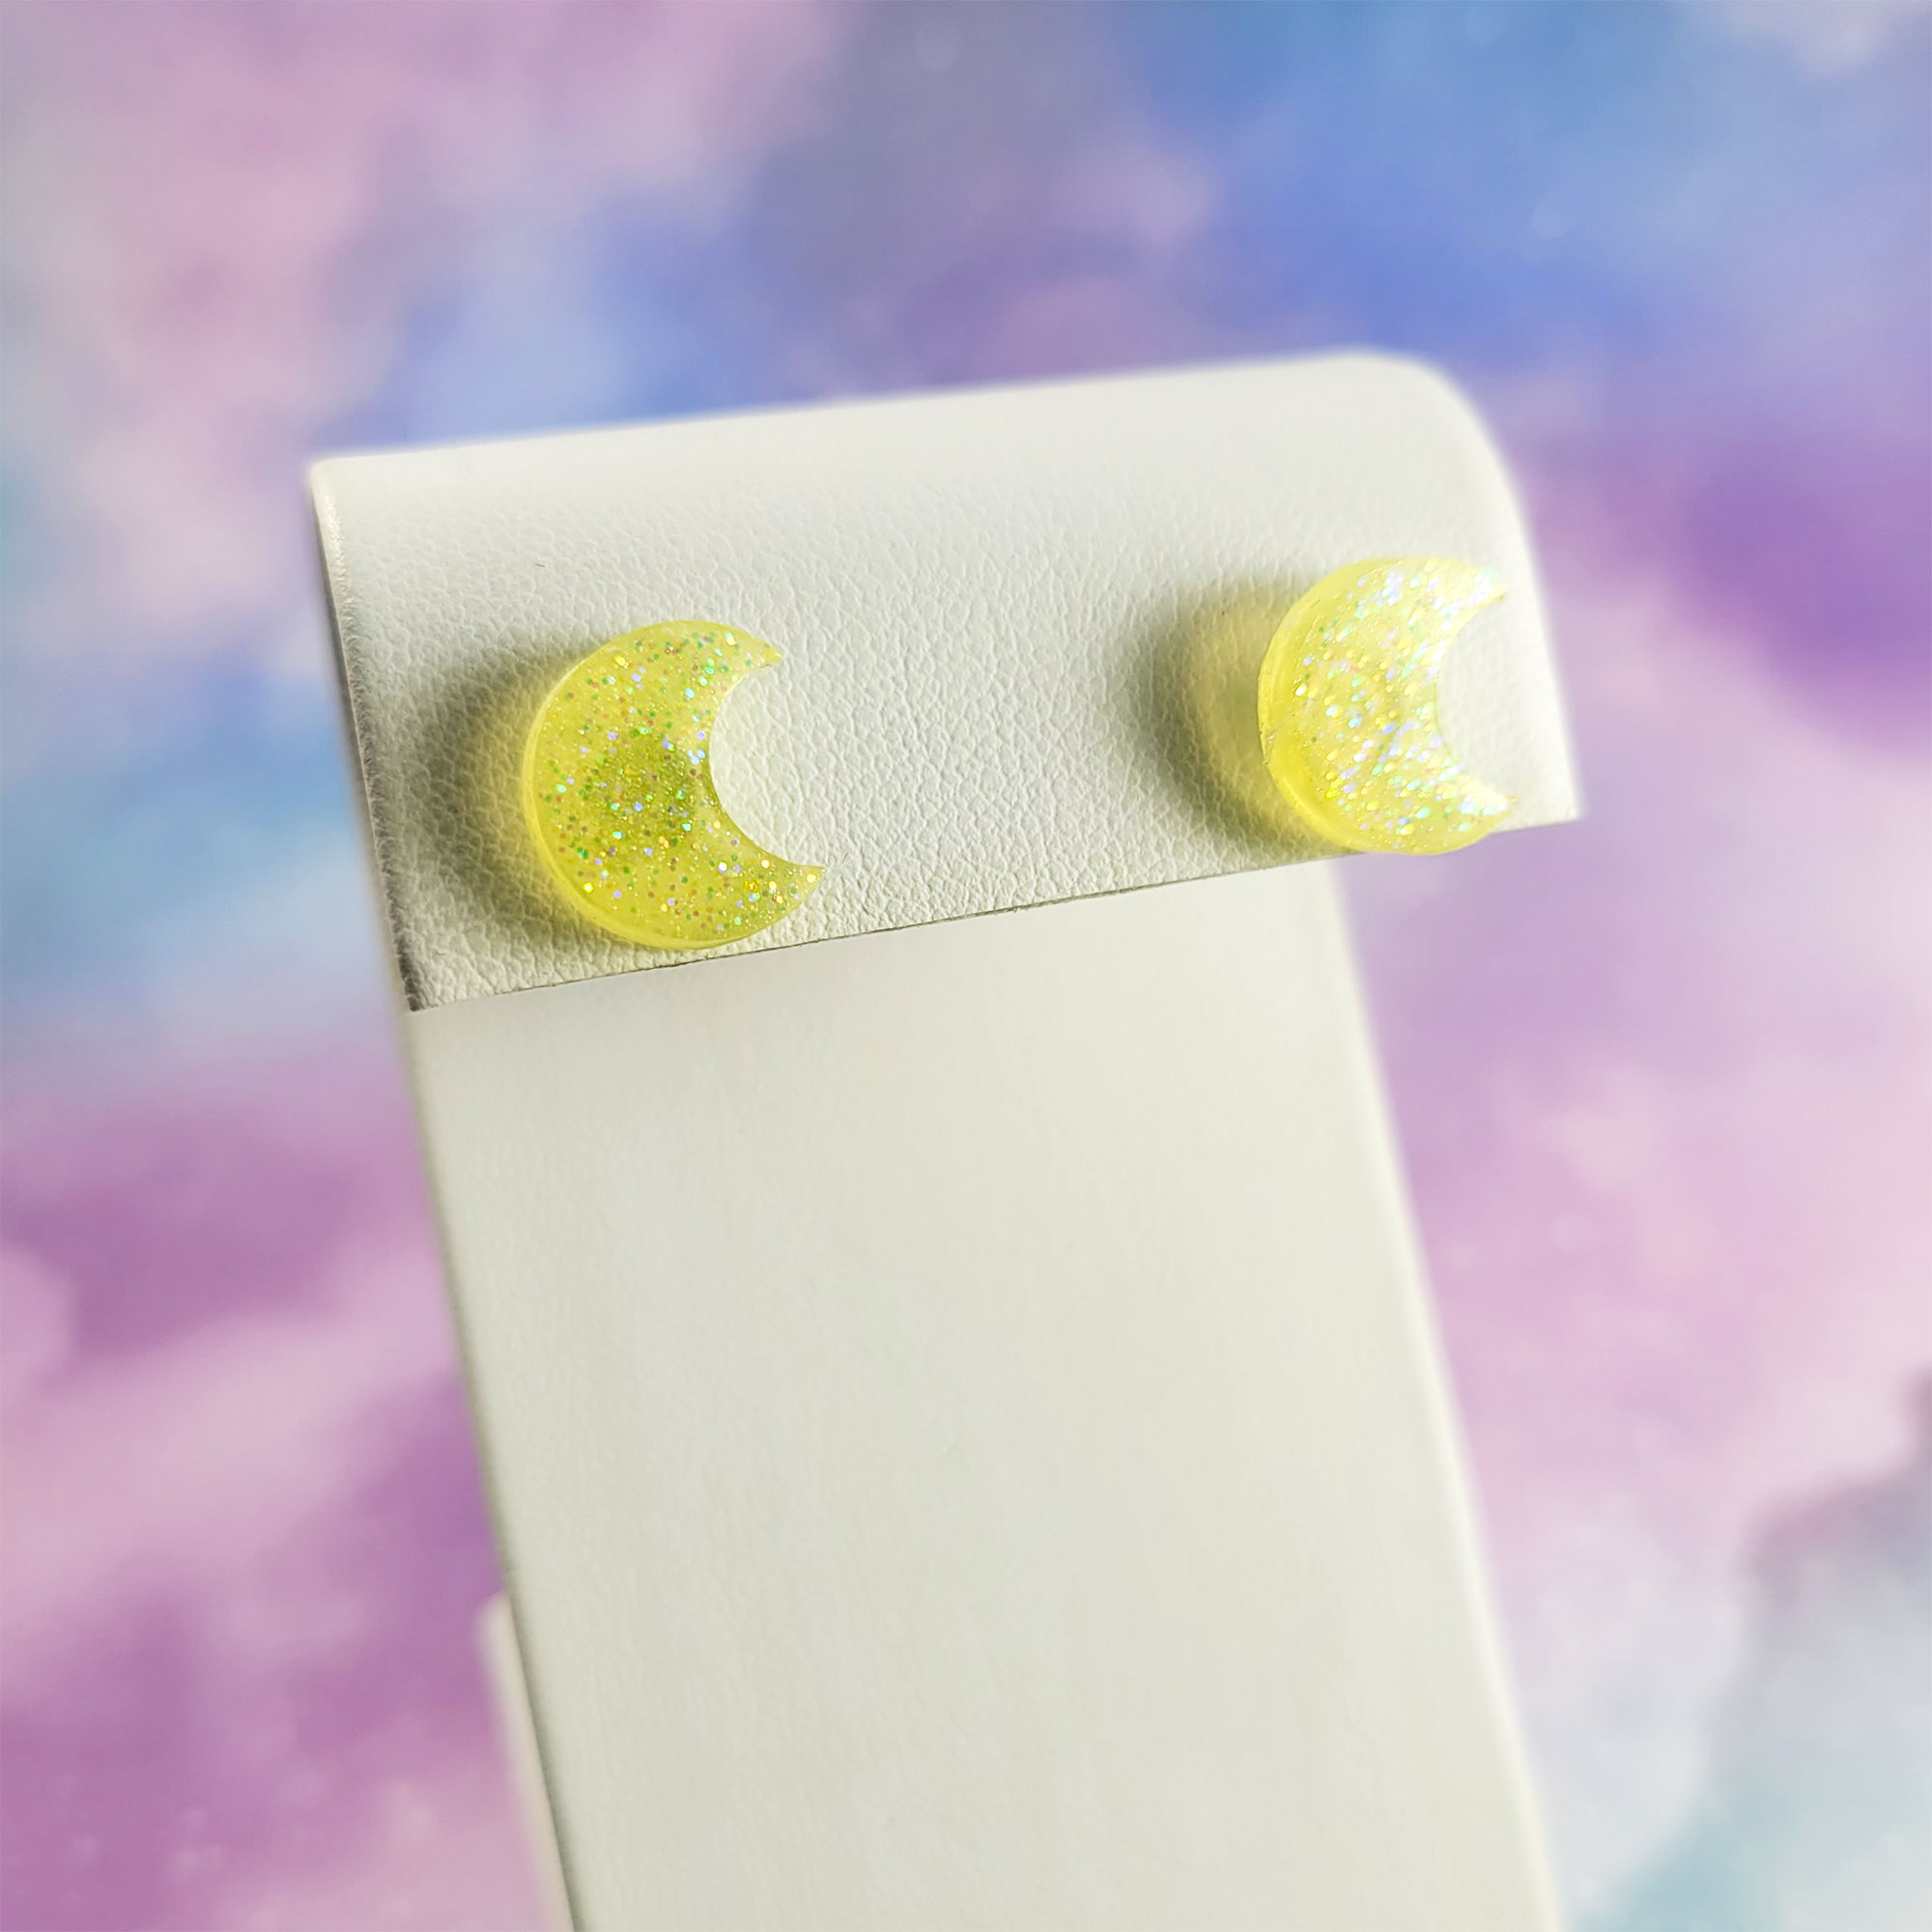 Neon Yellow Crescent Moon Earrings by Wilde Designs